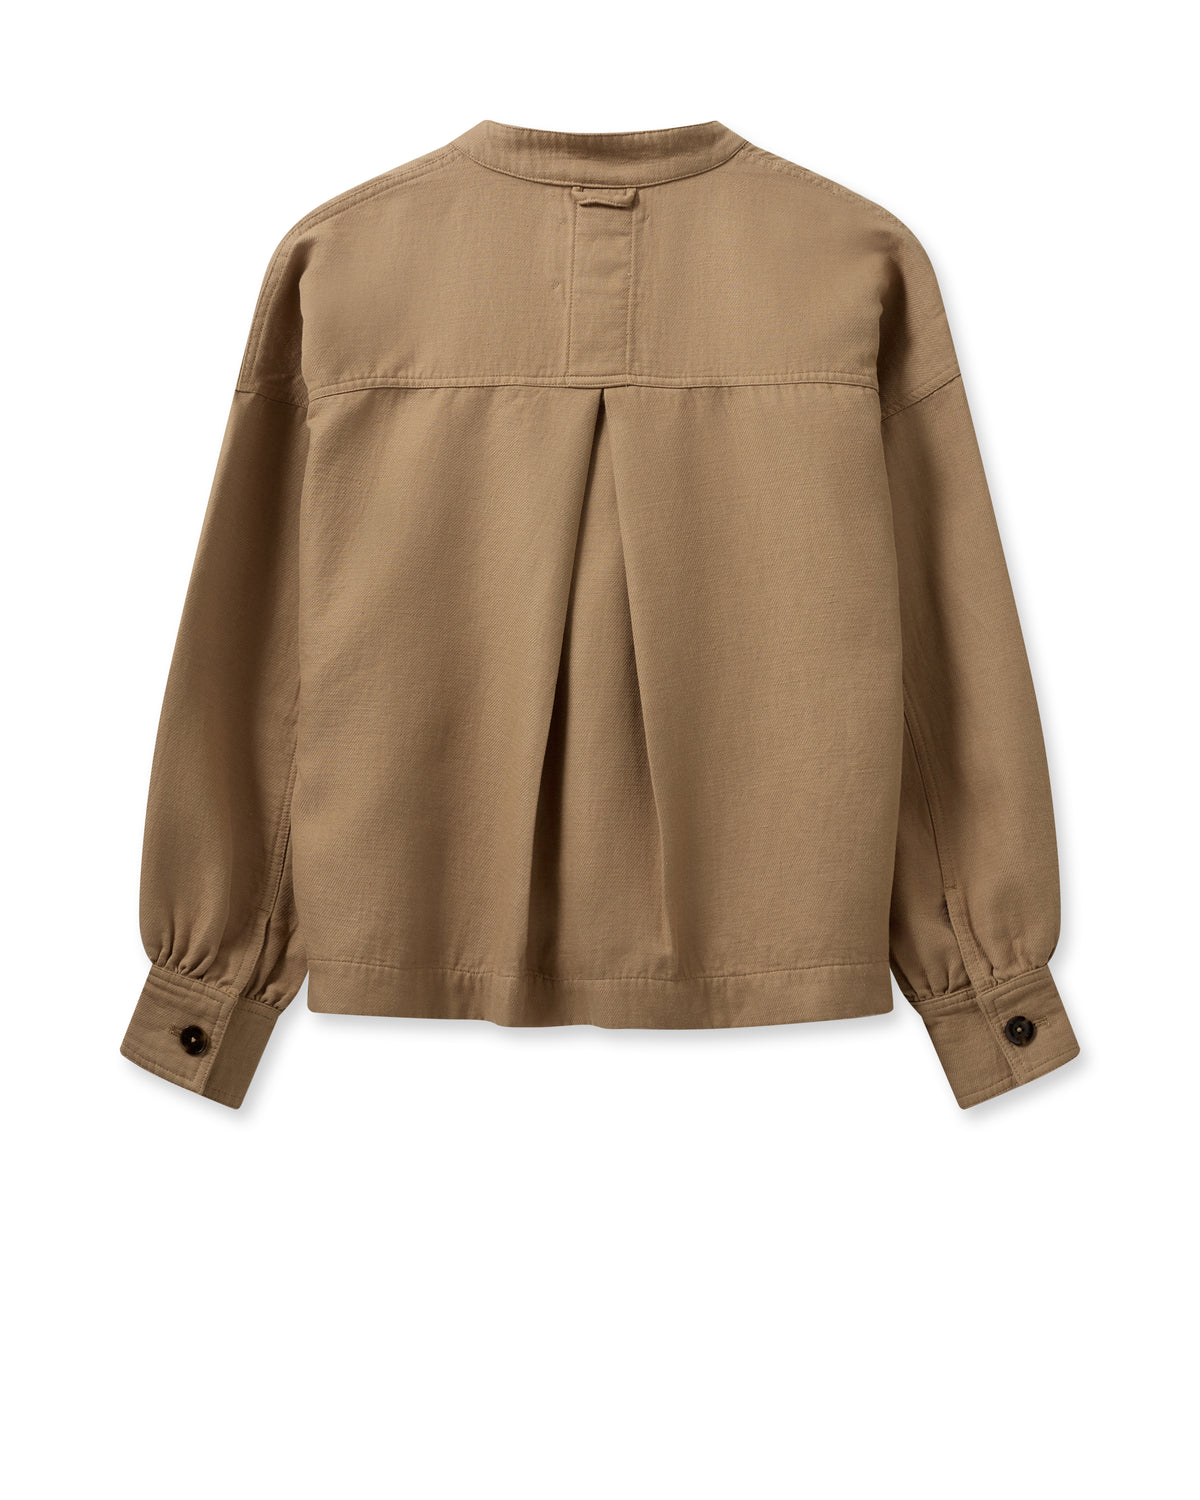 Camel brown linen jacket